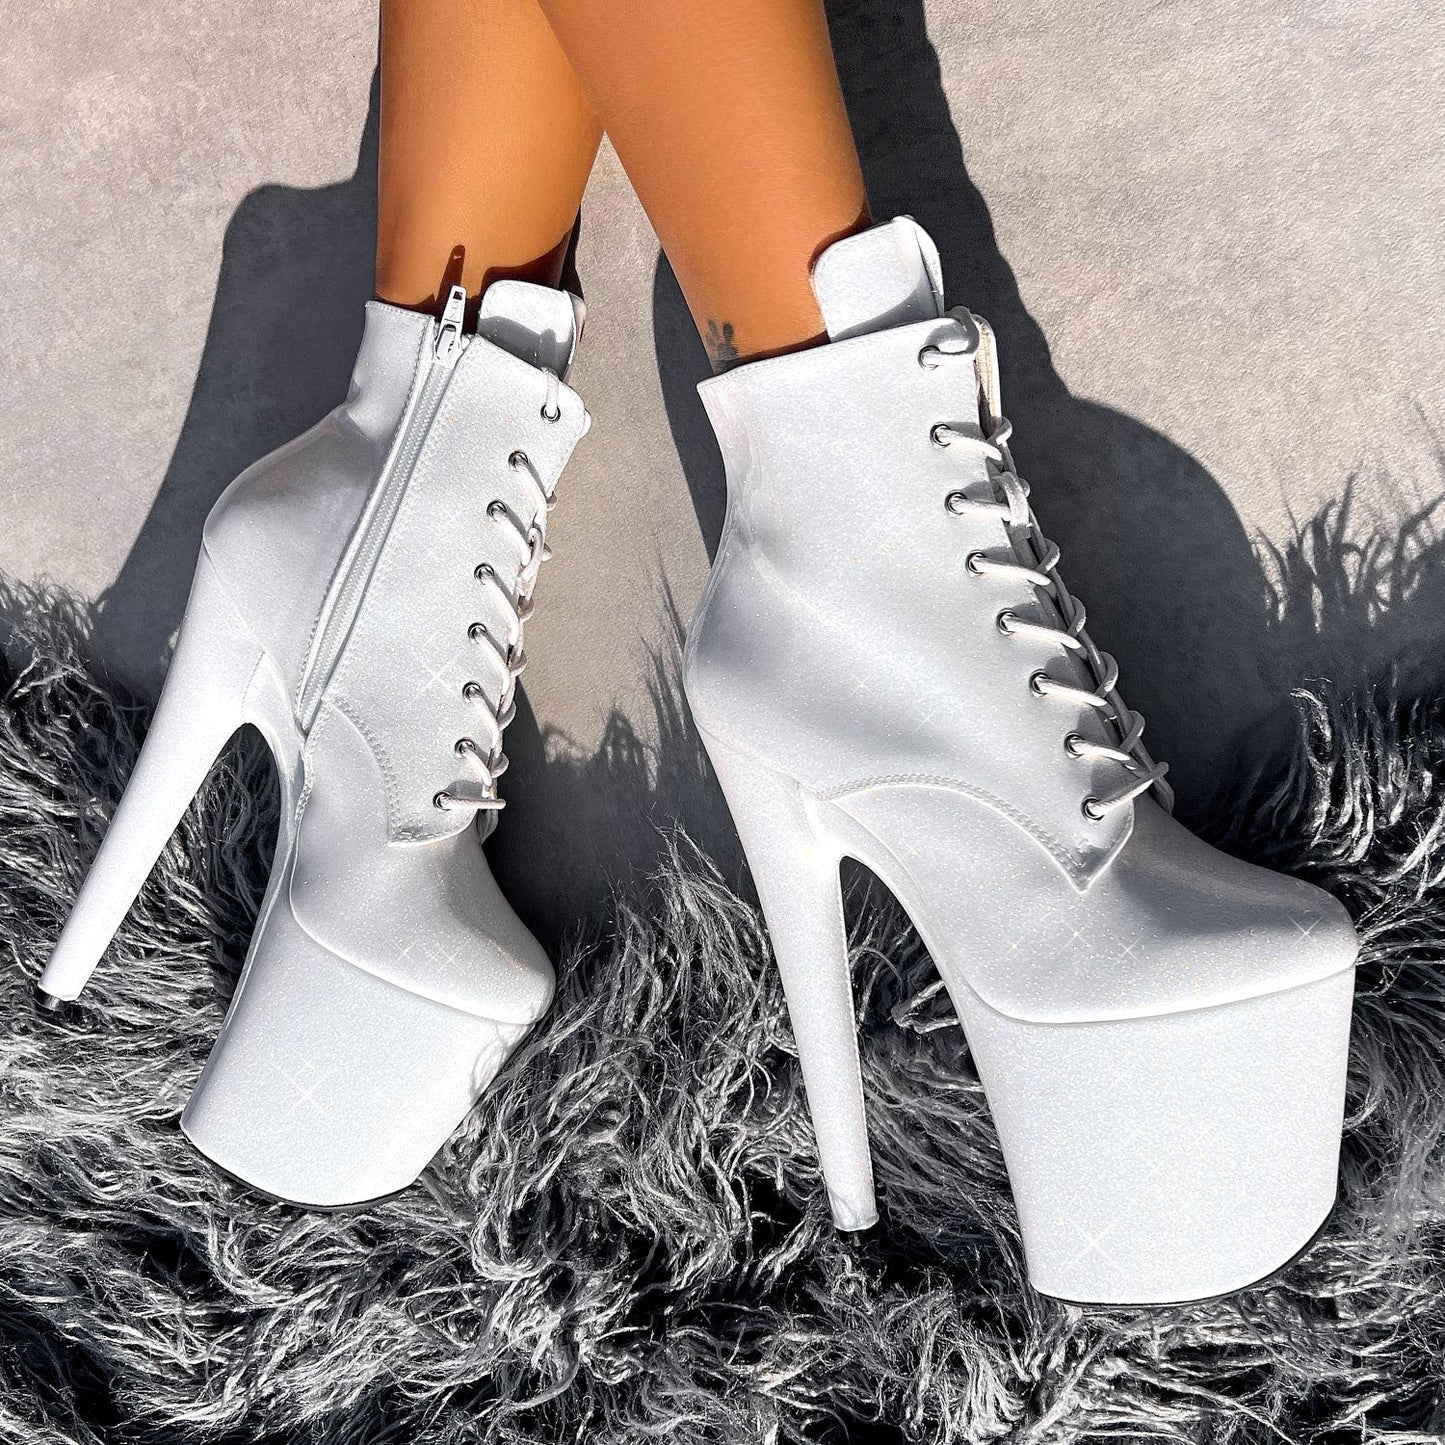 The Glitterati Ankle Boot - Snow Kween - 8 INCH, stripper shoe, stripper heel, pole heel, not a pleaser, platform, dancer, pole dance, floor work